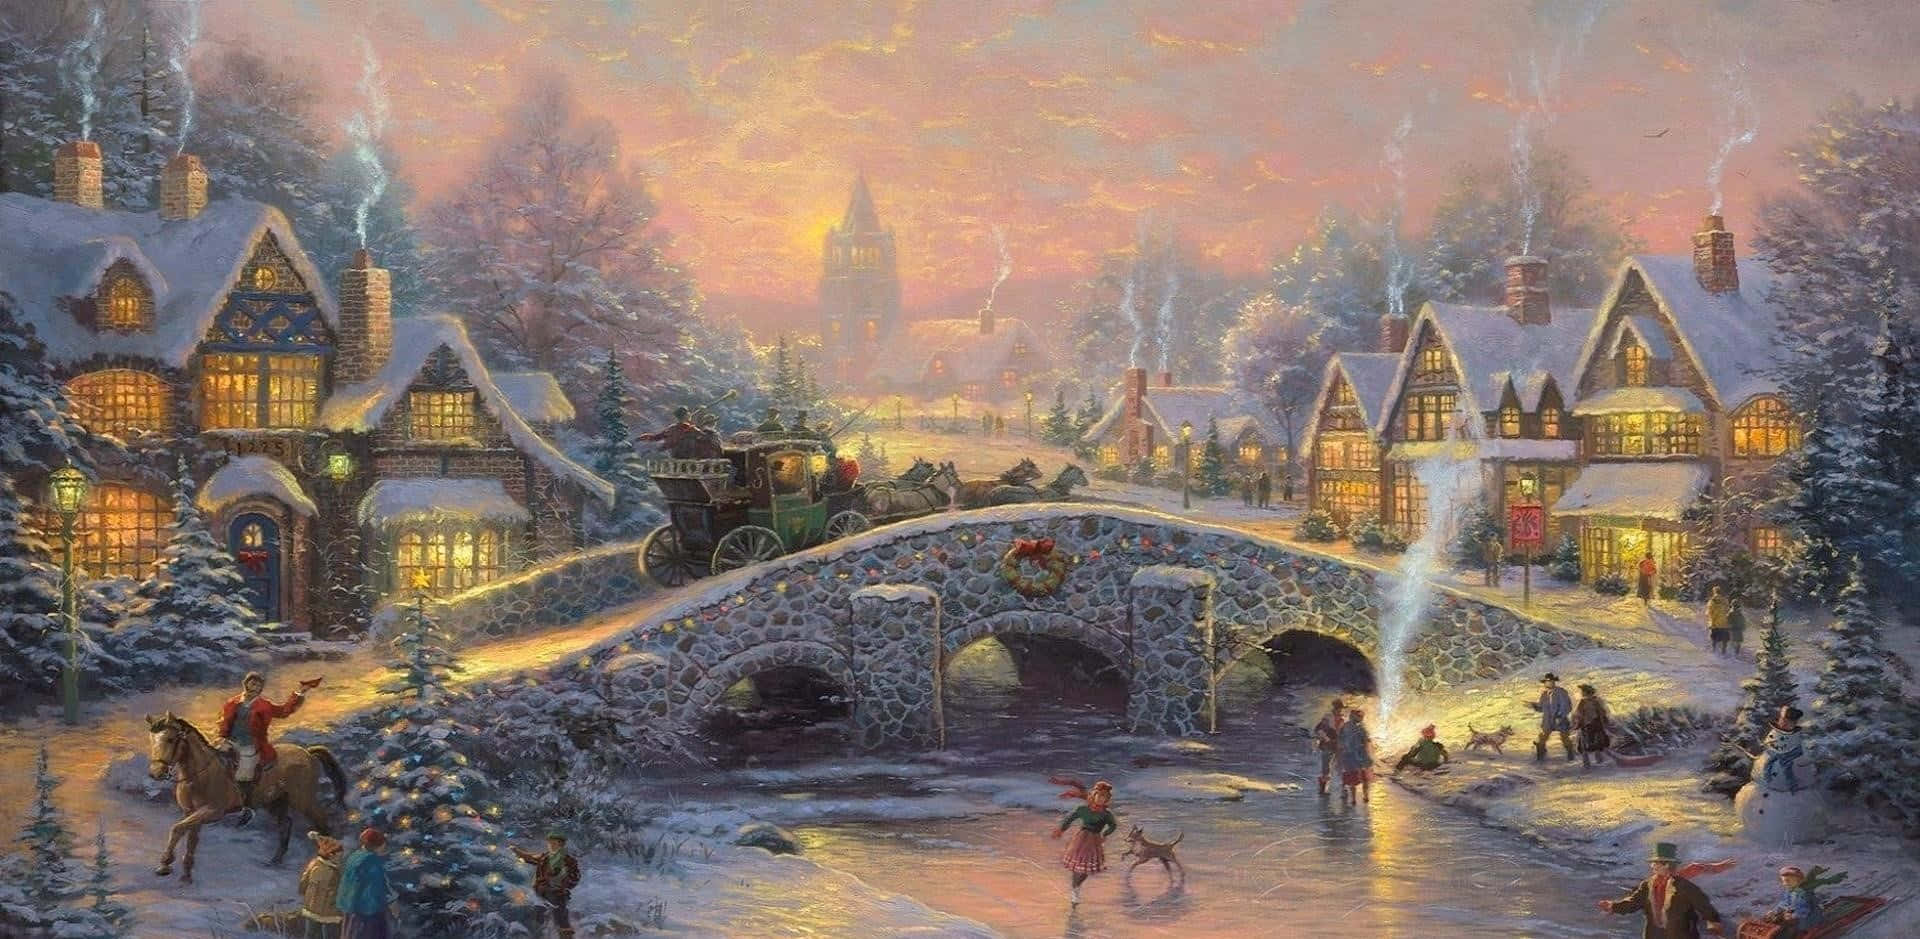 Enchanting Winter Wonderland Scene Wallpaper